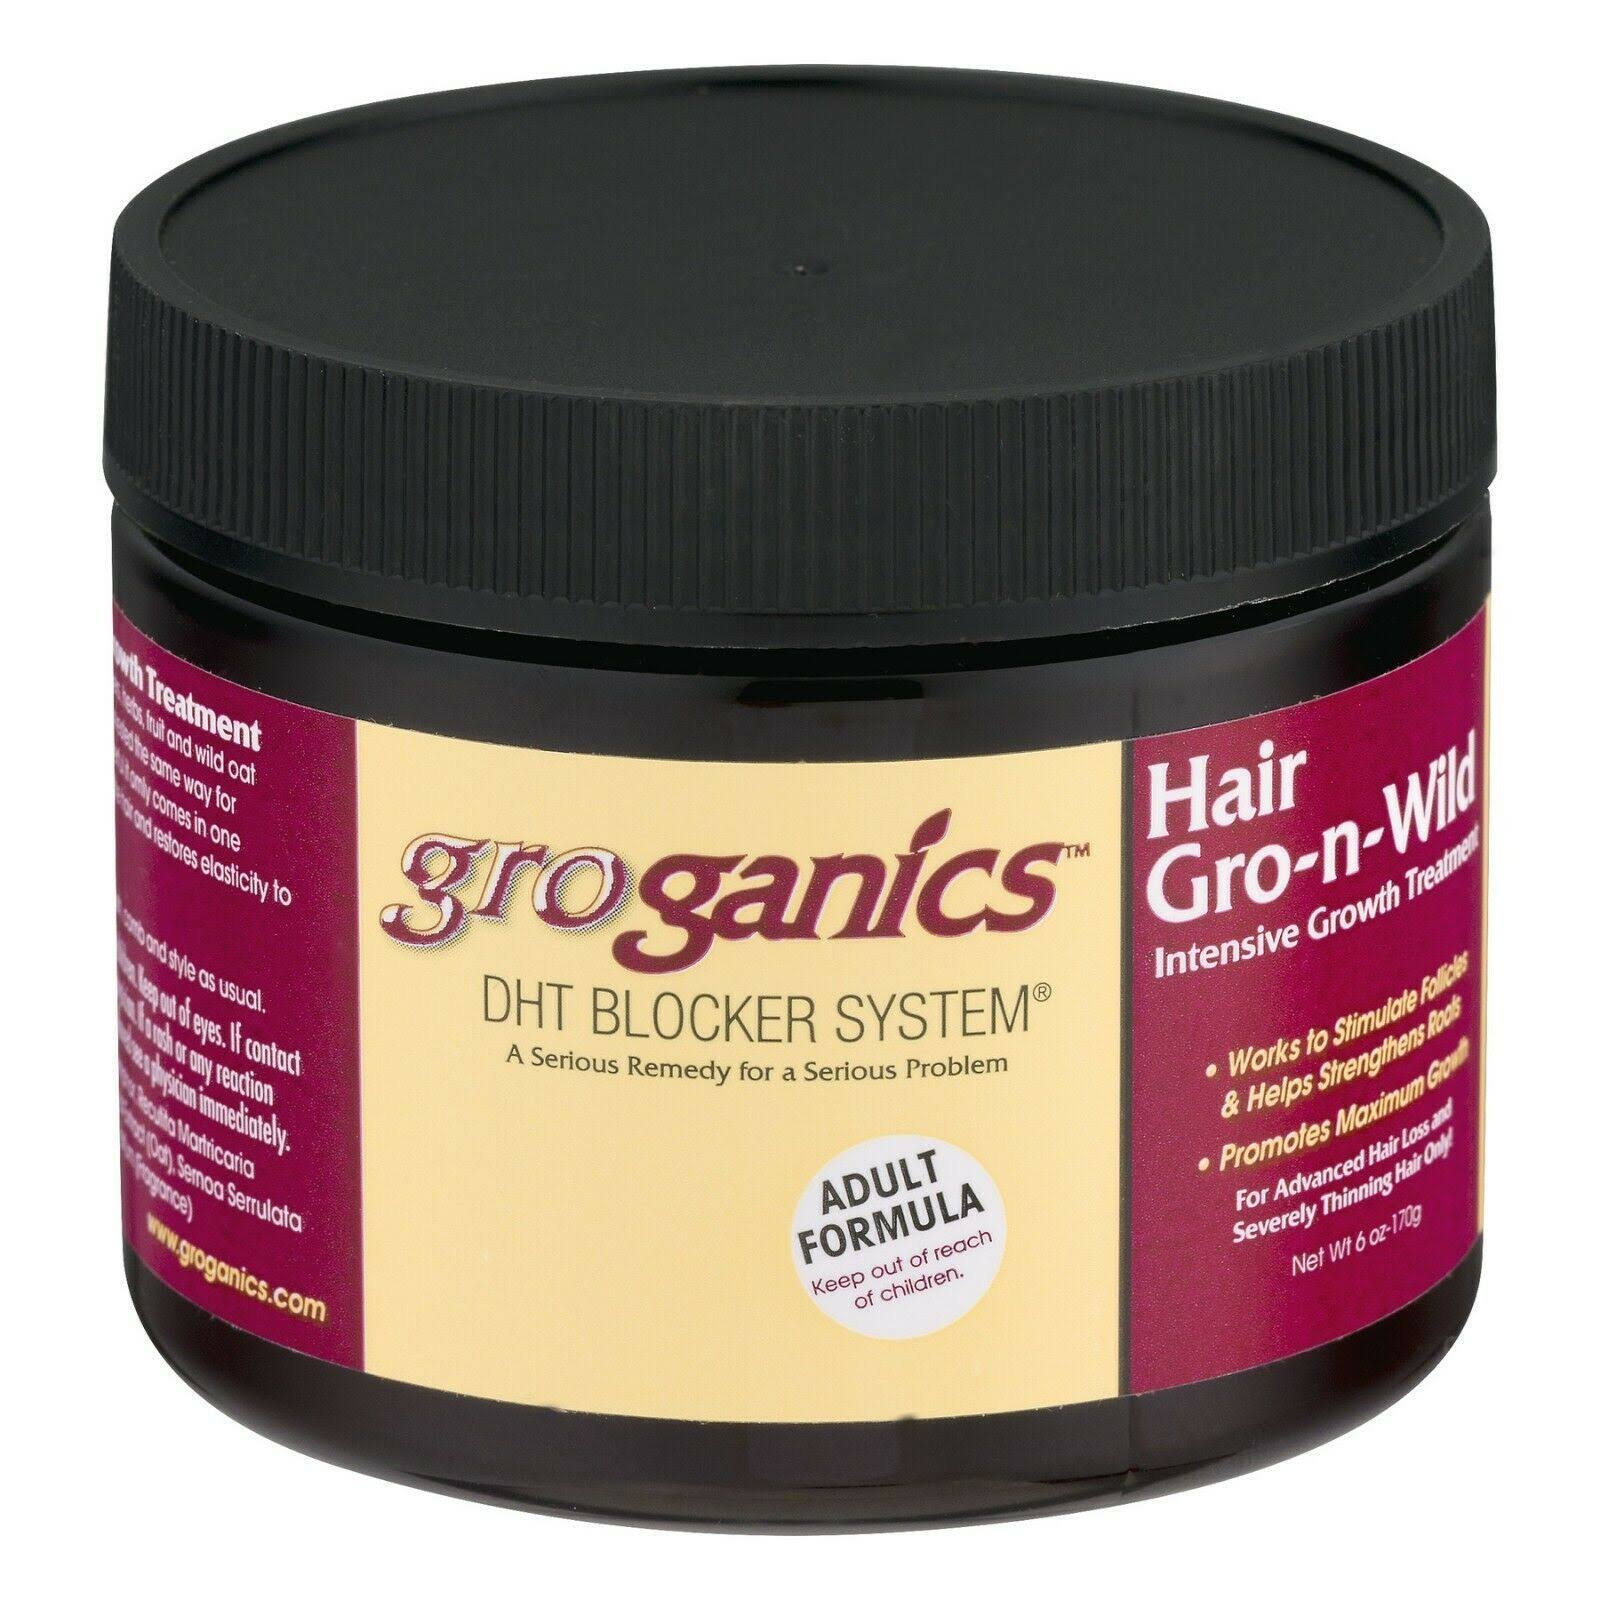 Groganics DHT Blocker System Hair Gro-n-Wild Intensive Growth Treatment - 6oz